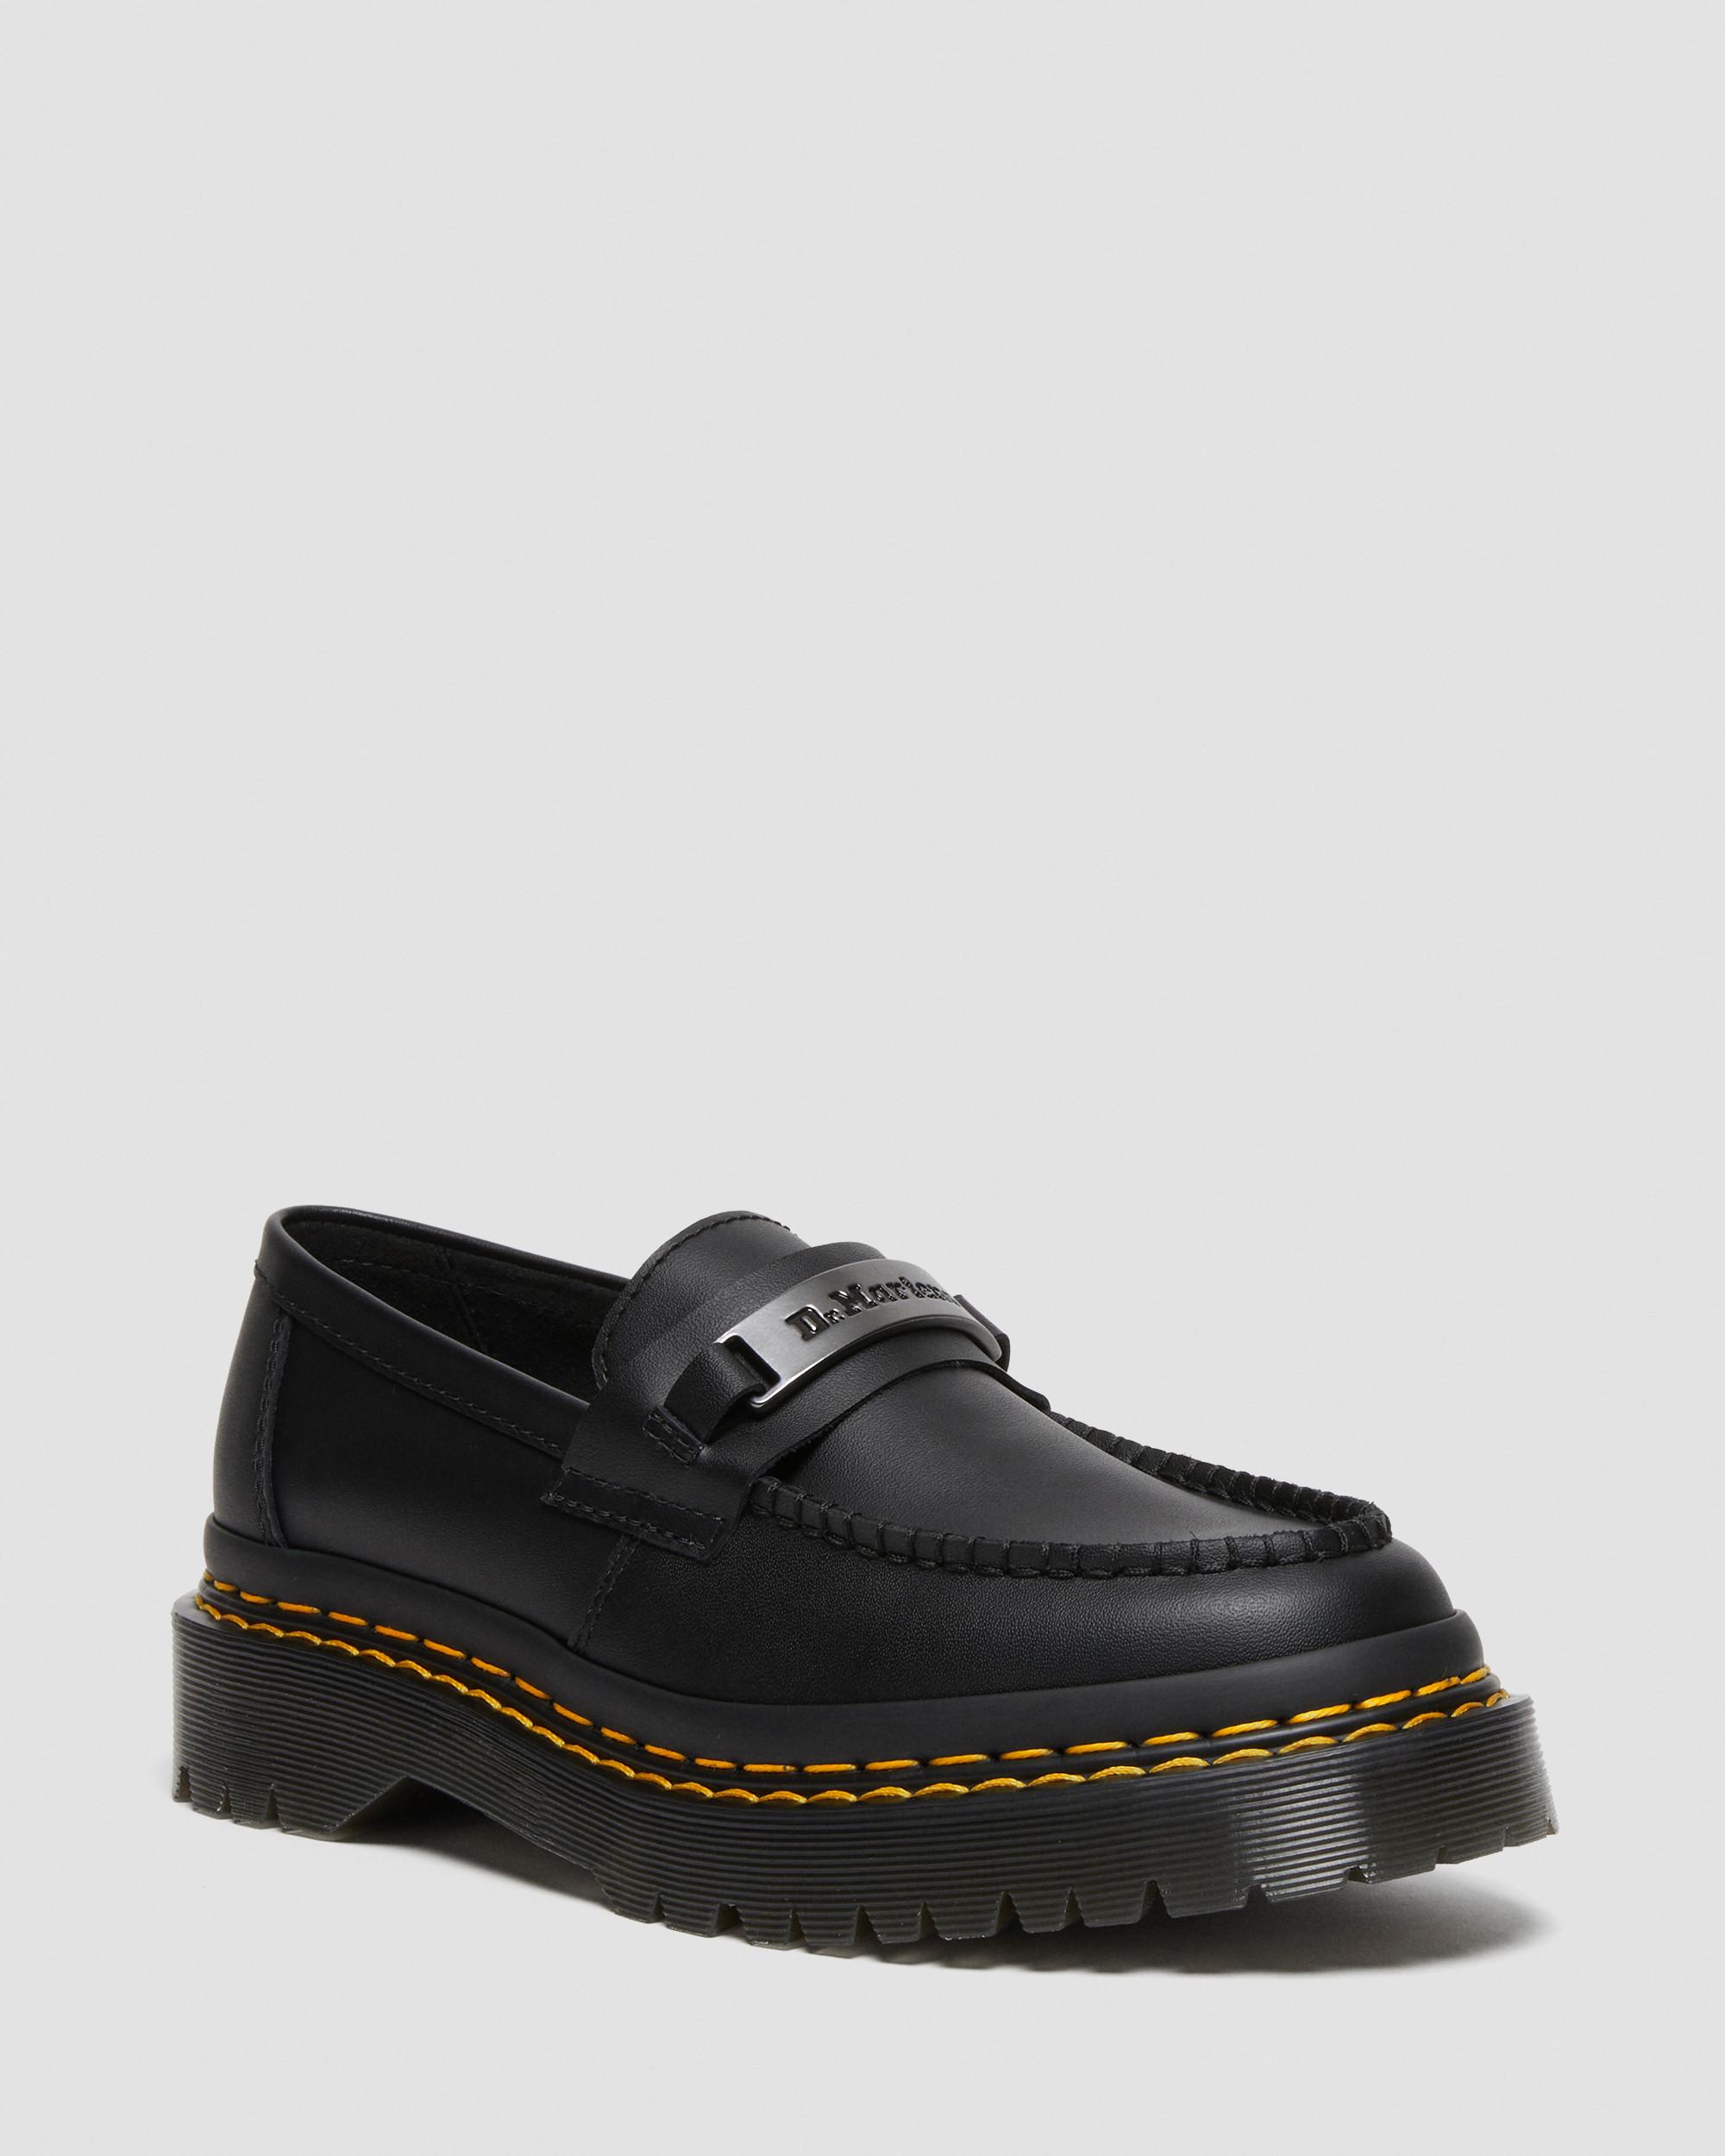 Penton Bex Double Stitch Leather Loafers, Black | Dr. Martens